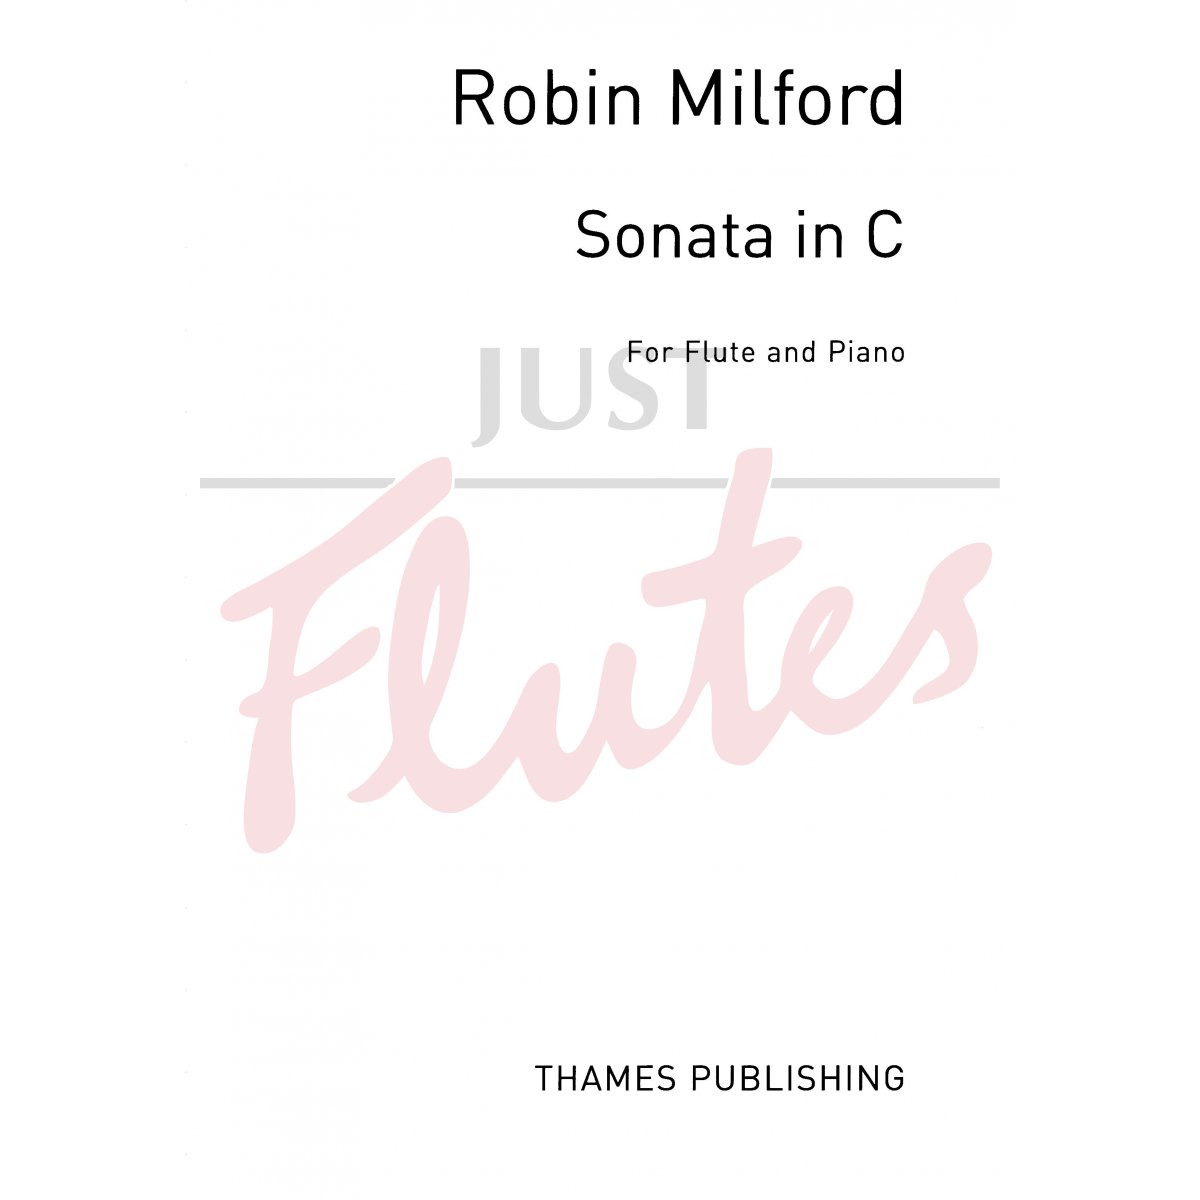 Sonata in C for Flute and Piano